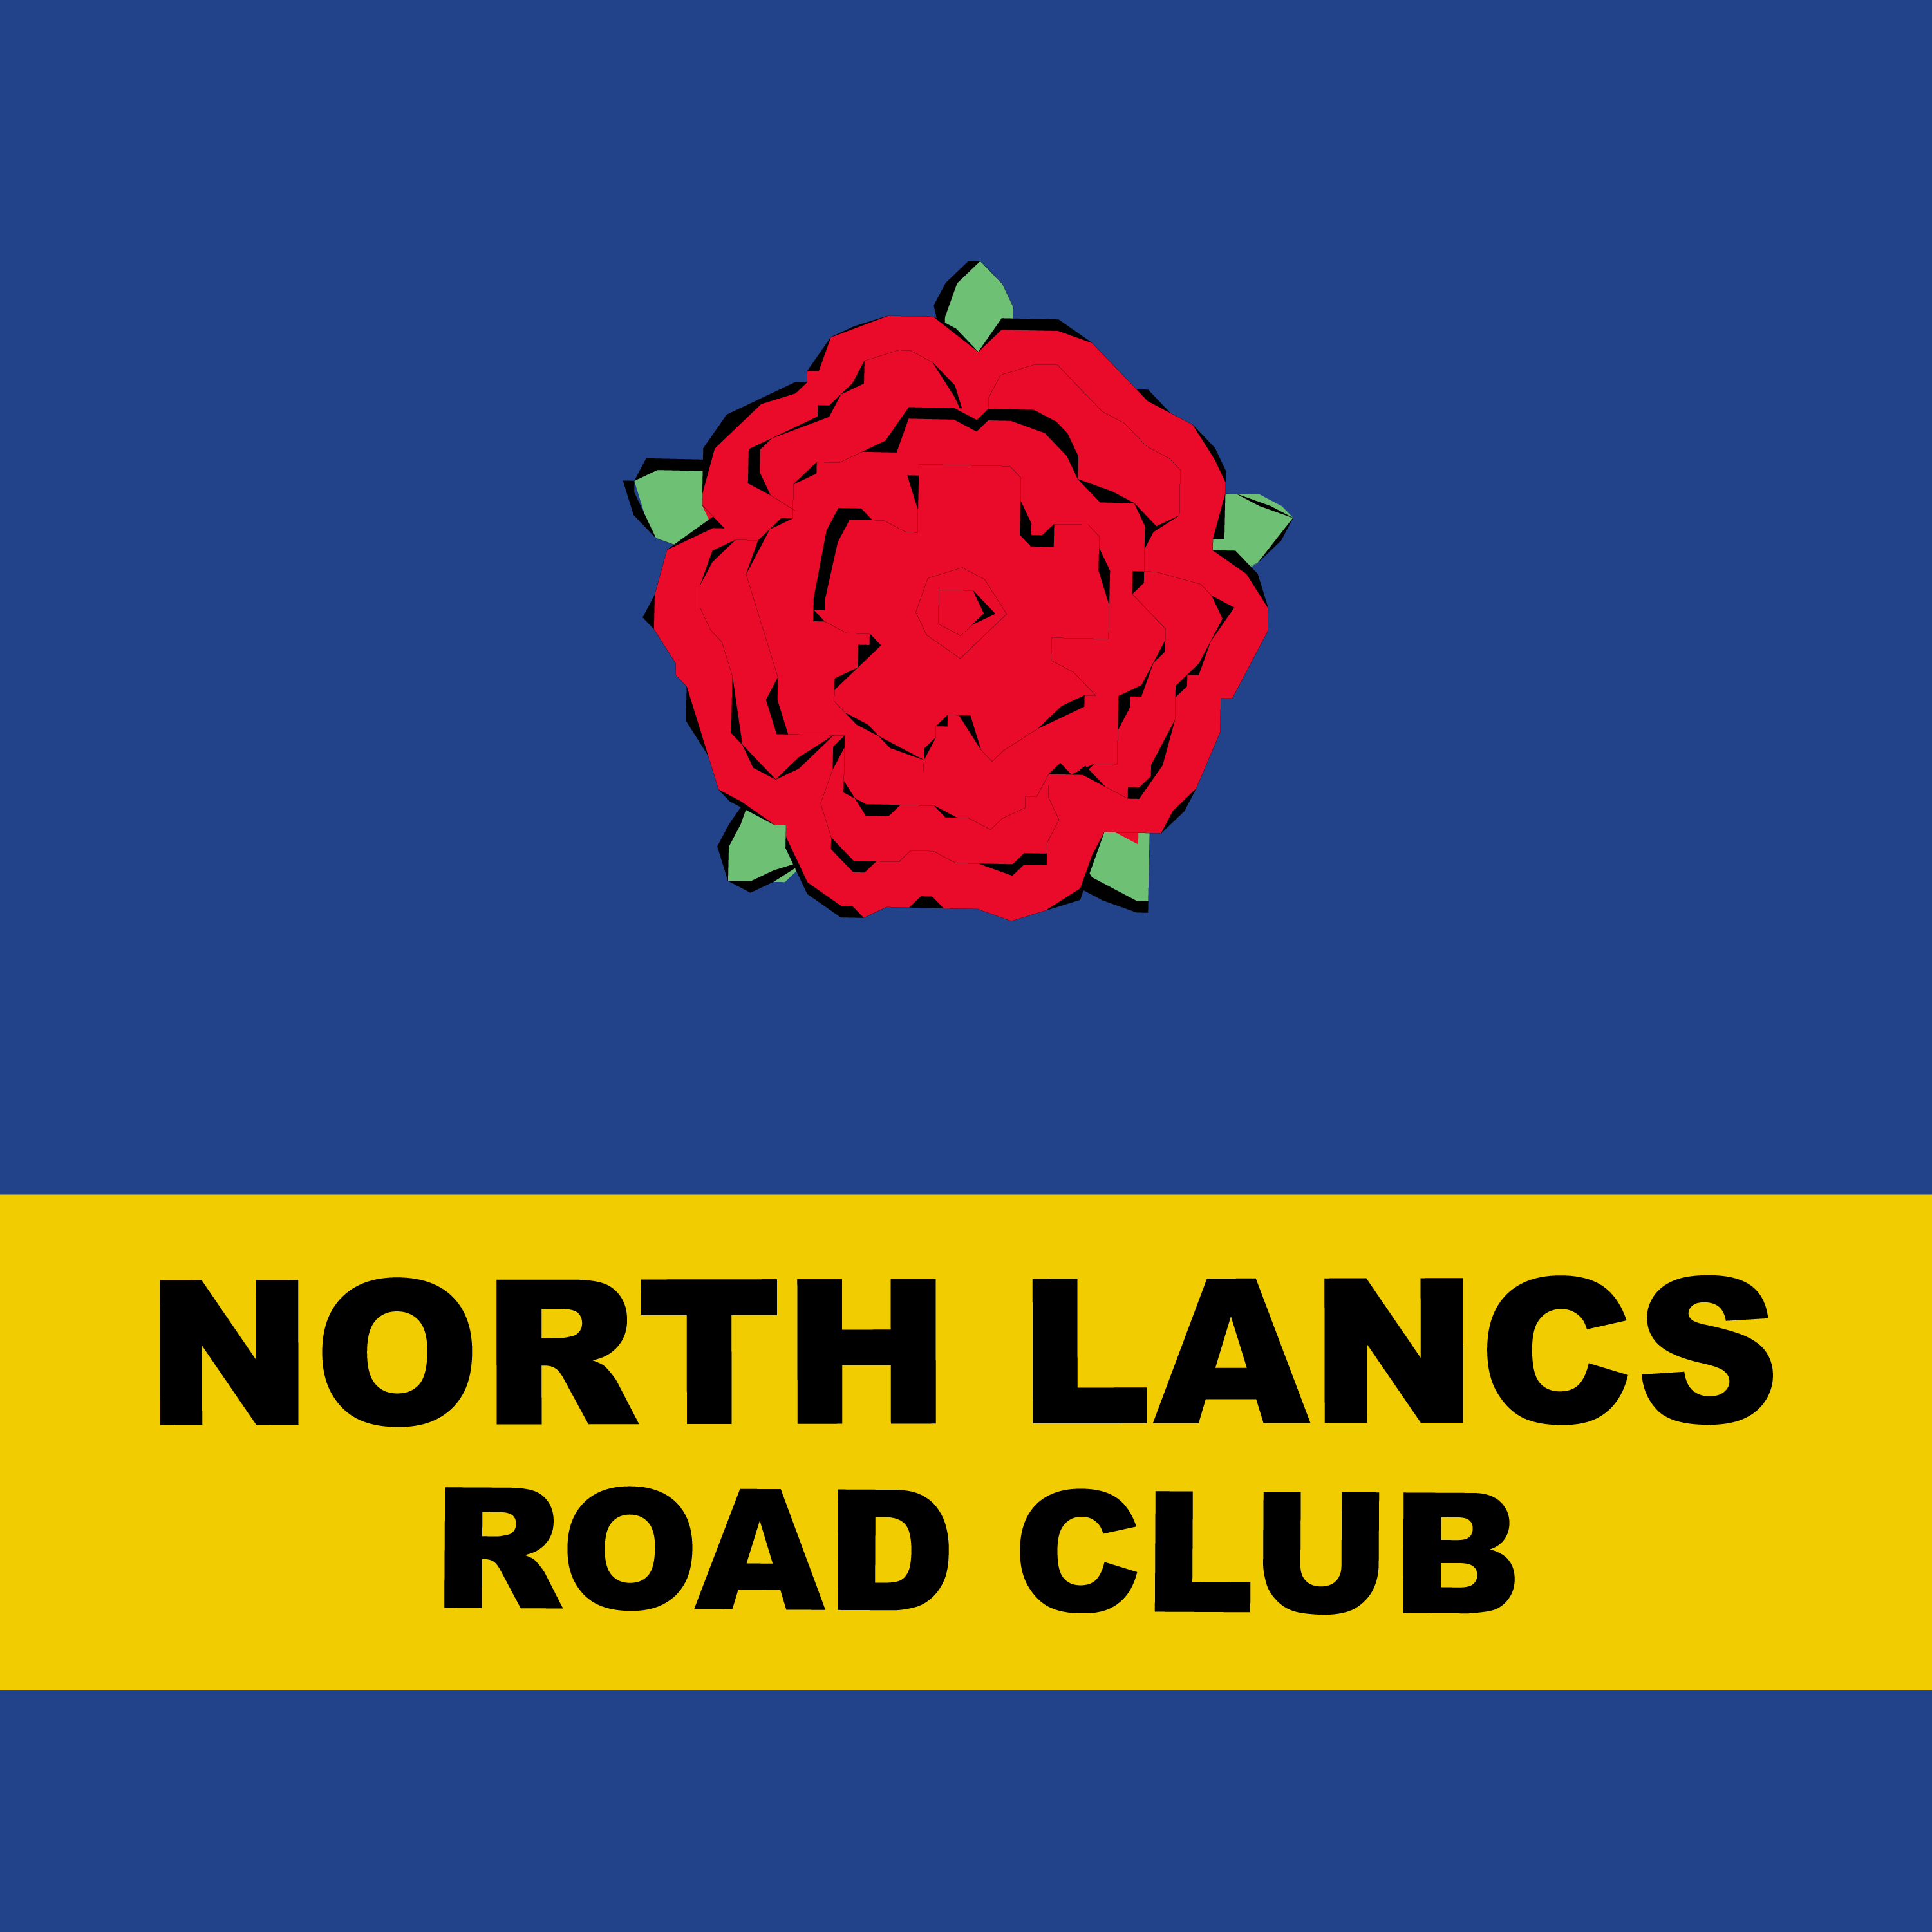 Club Image for NORTH LANCS ROAD CLUB